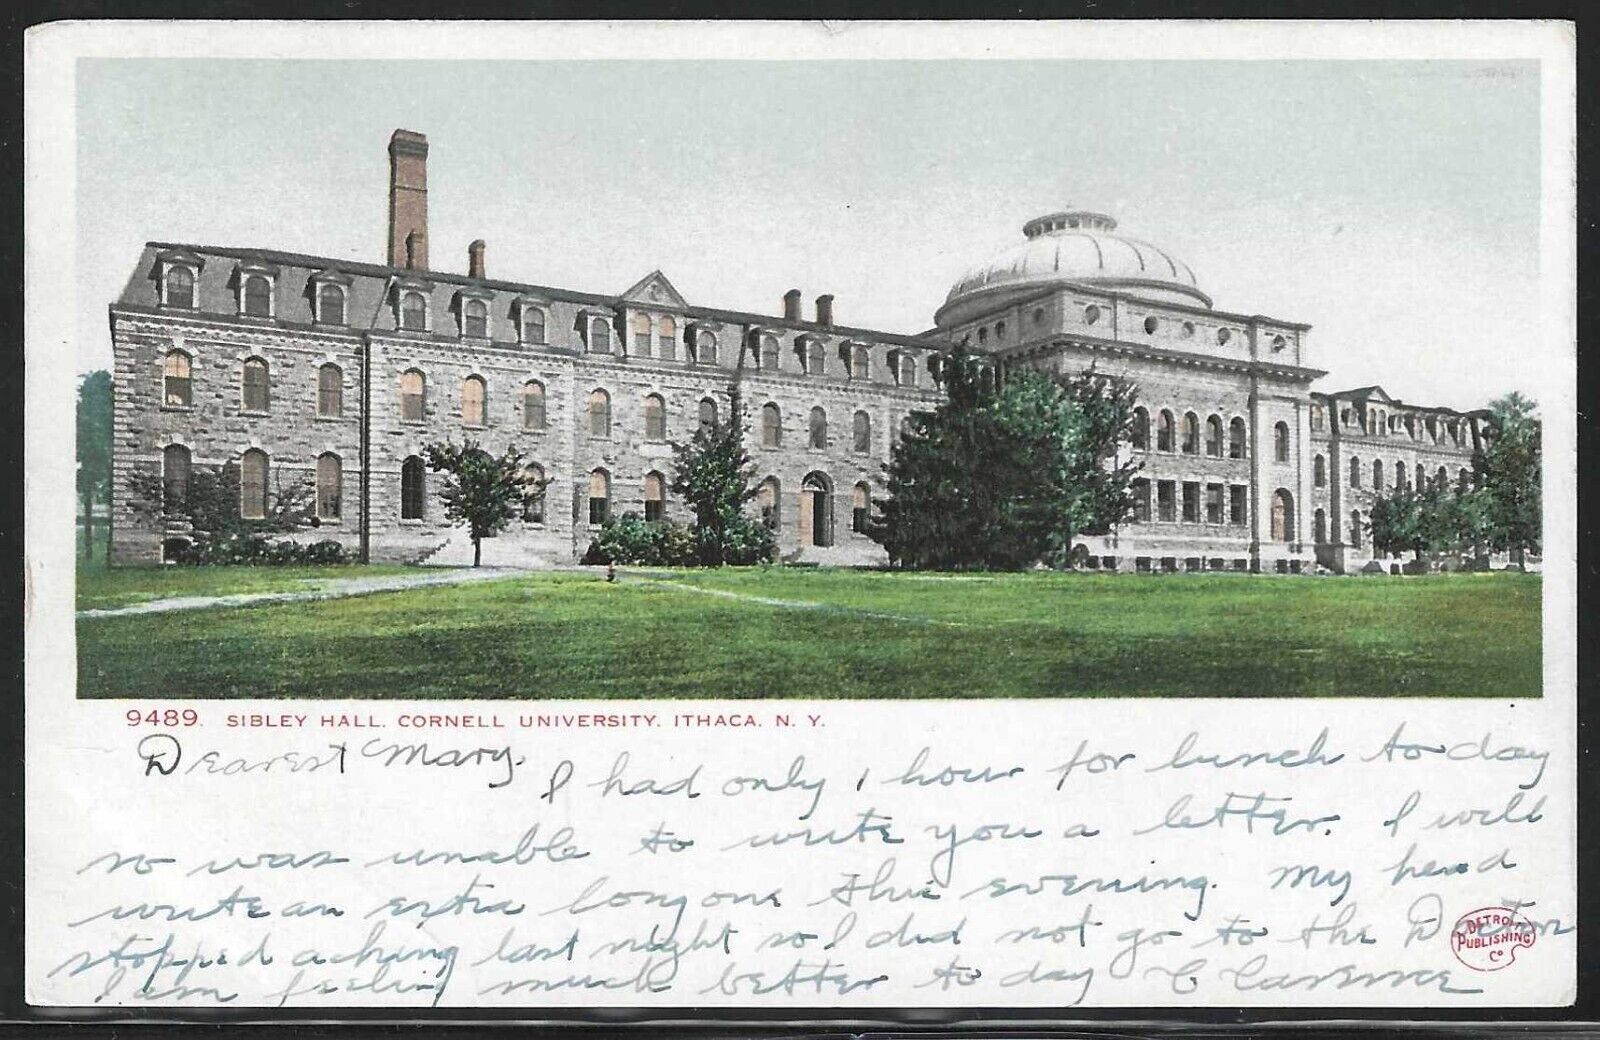 Sibley Hall, Cornell Univ., Ithaca, N.Y., Early Postcard, Detroit Publishing Co.